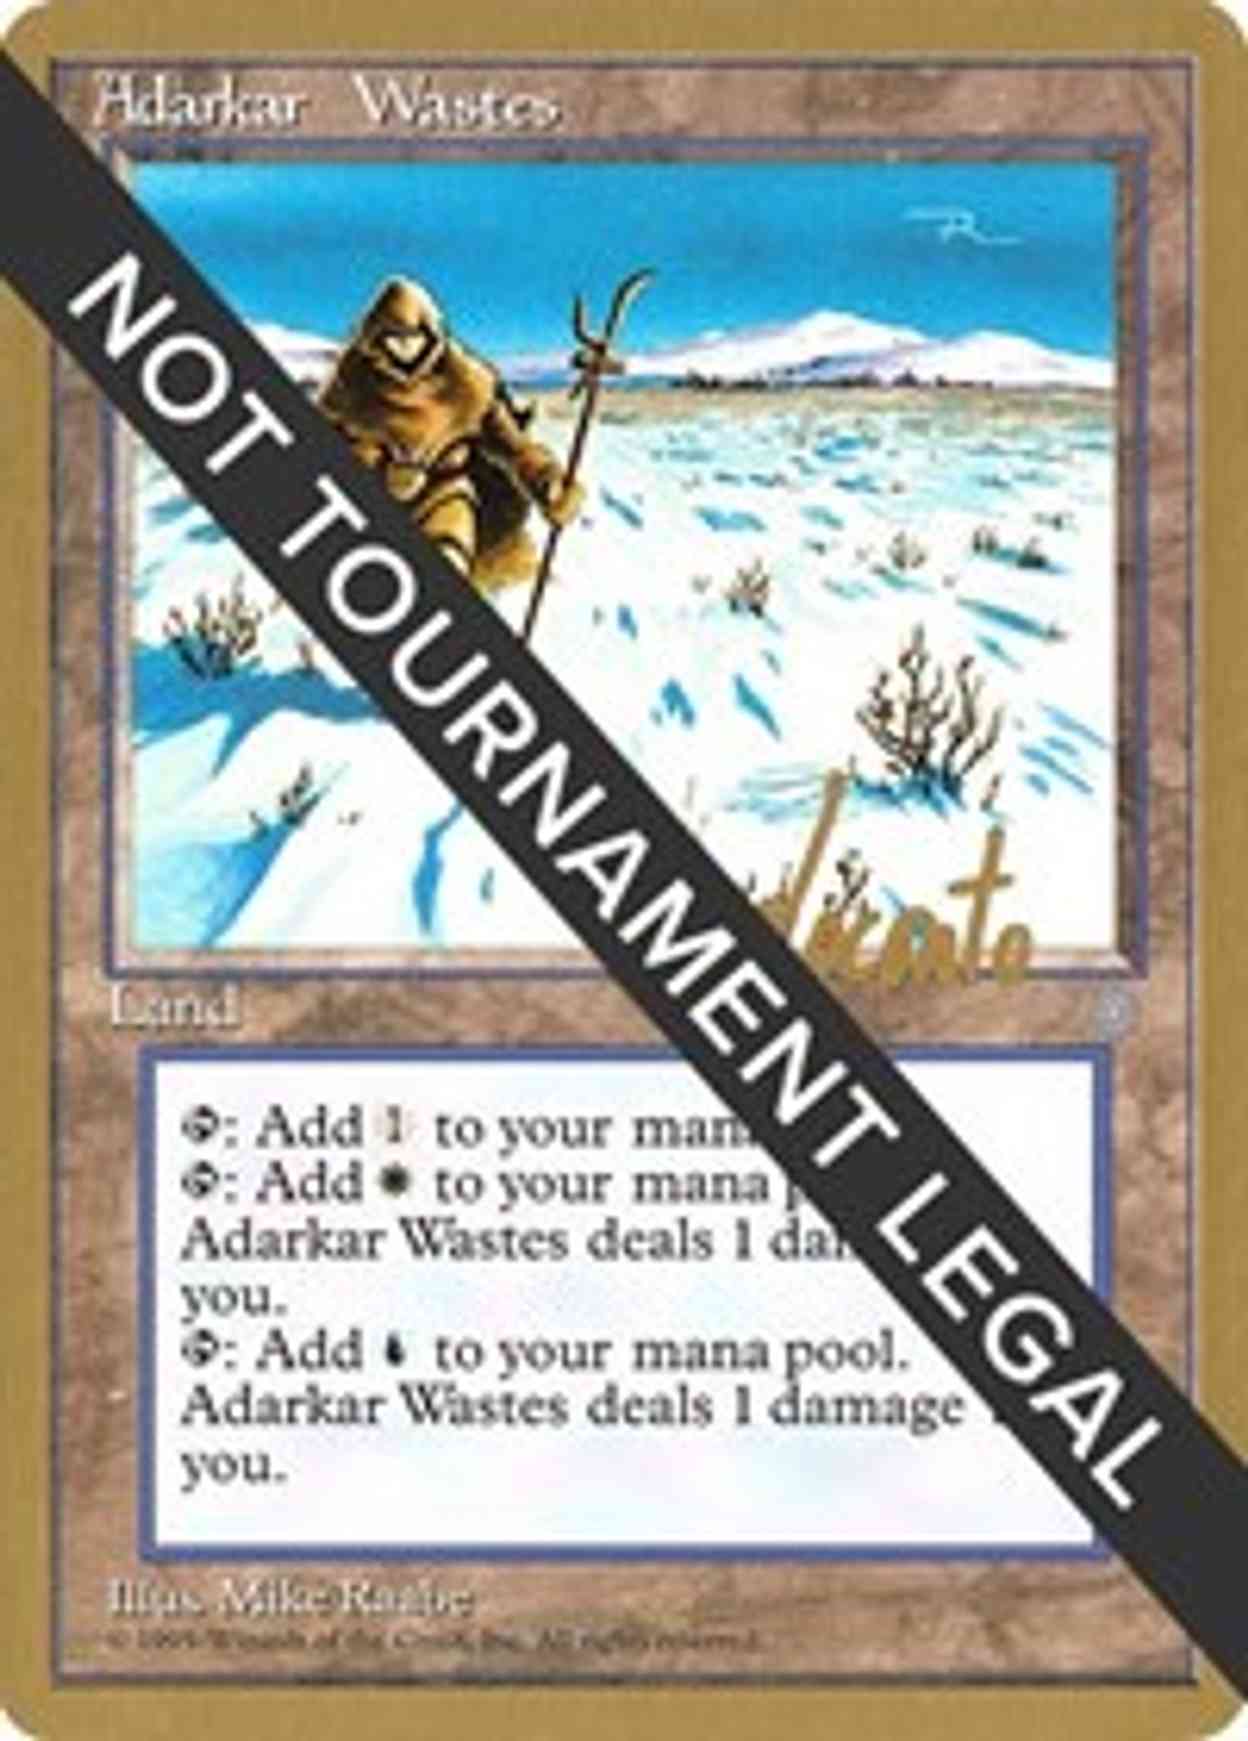 Adarkar Wastes - 1996 Michael Loconto (ICE) magic card front